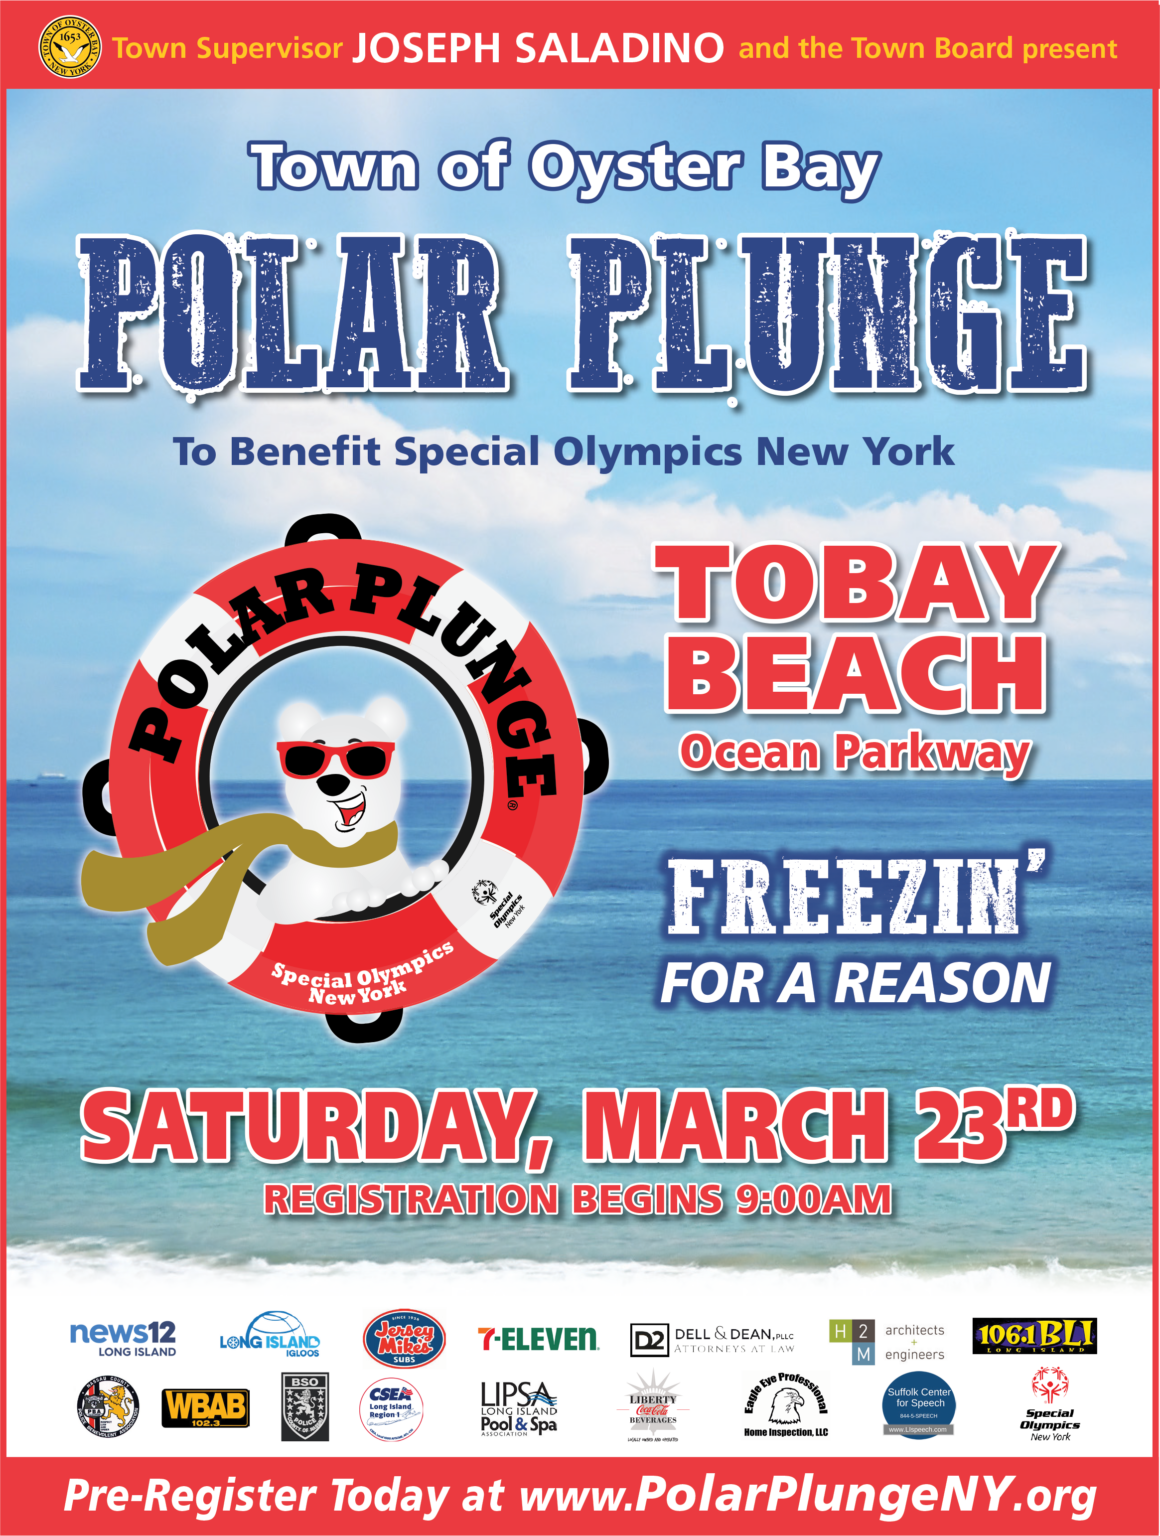 Polar Plunge Returns to TOBAY Beach March 23rd